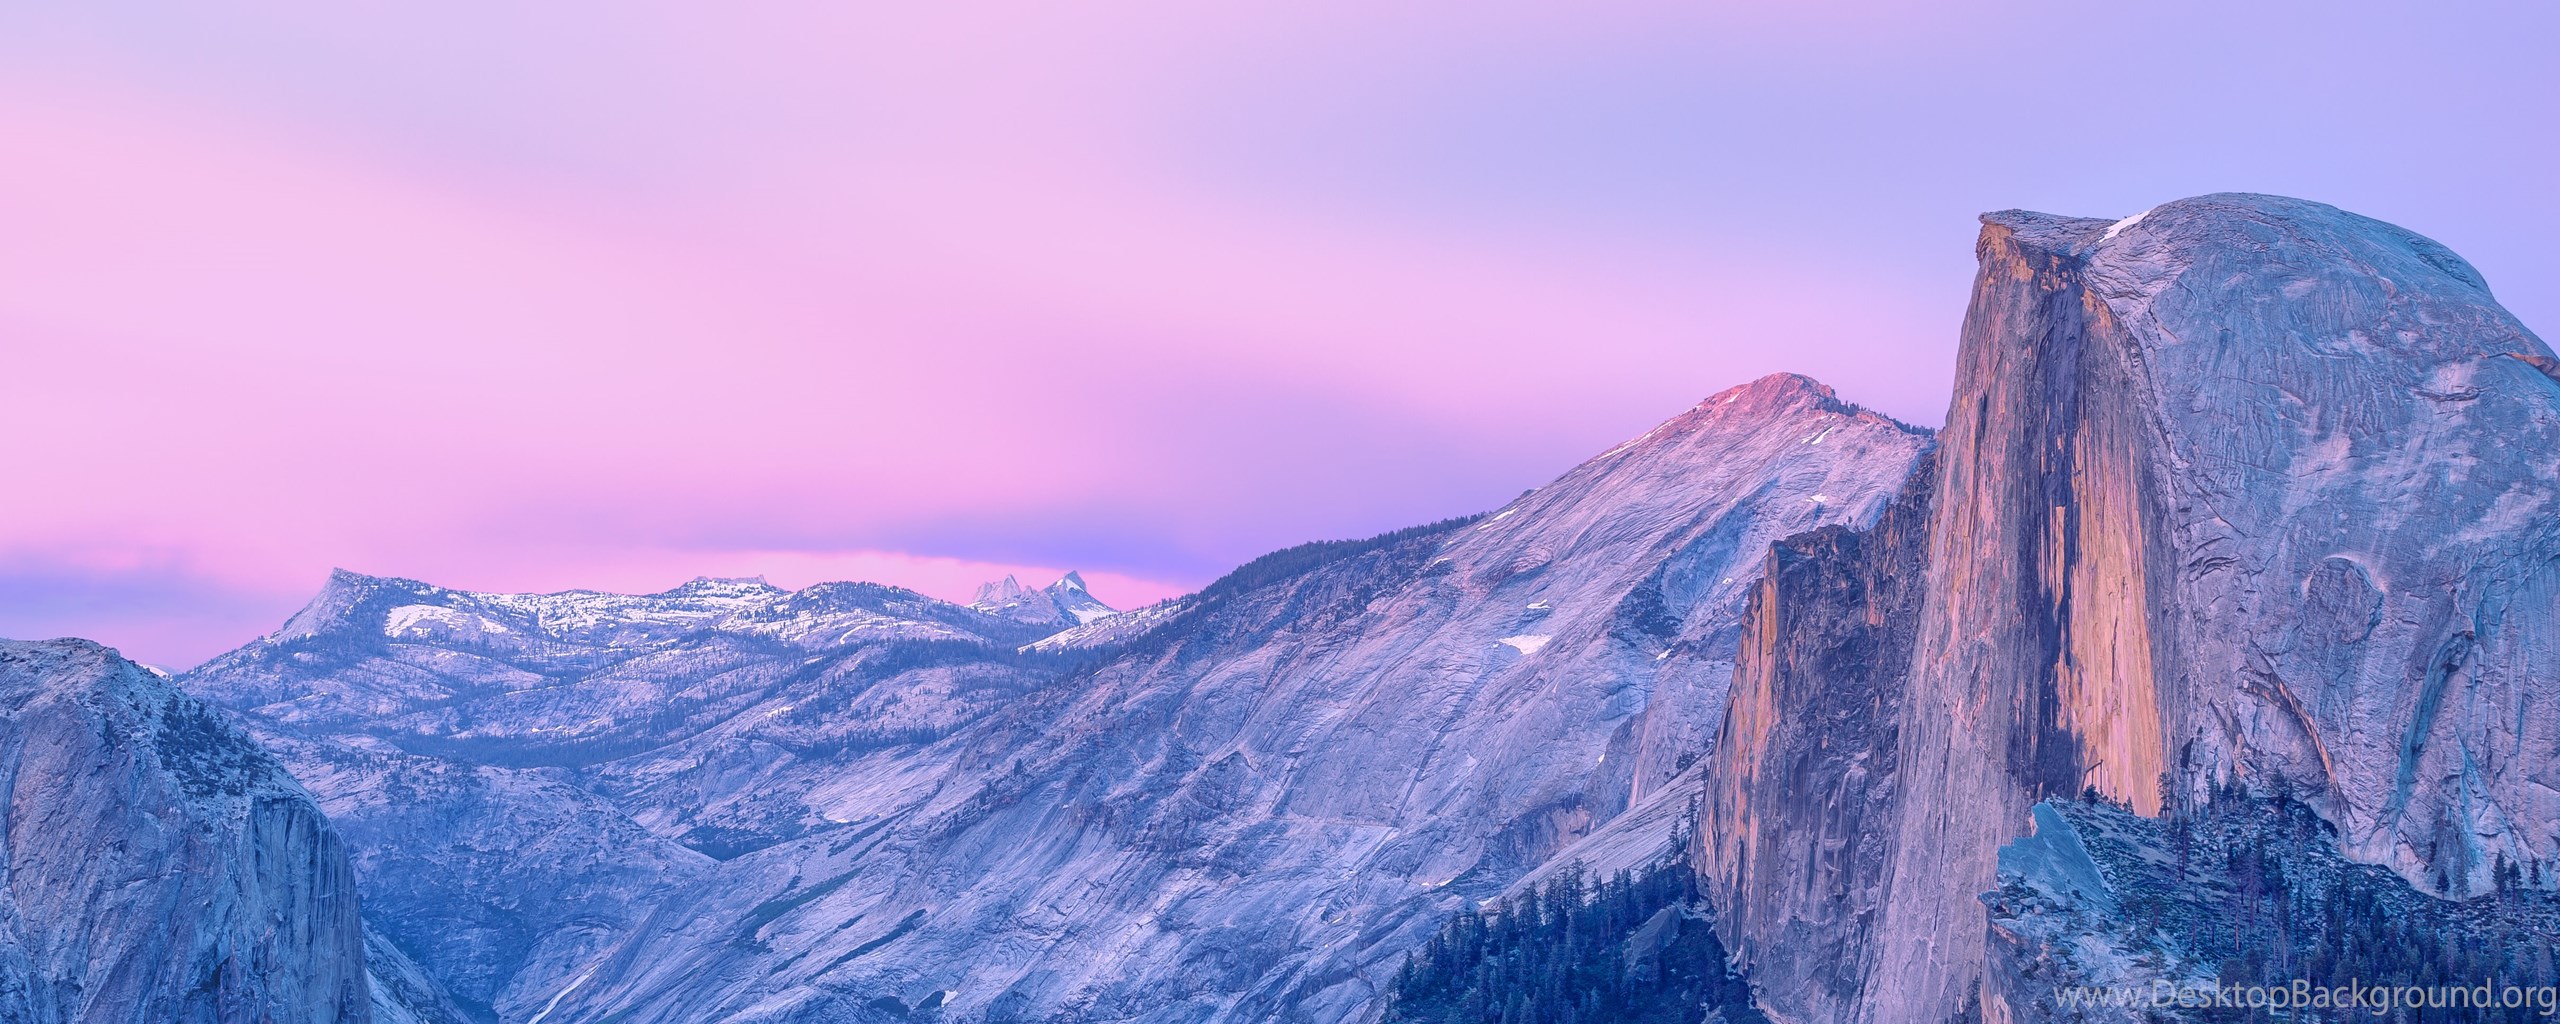 macの背景の壁紙,山,空,山脈,自然,海嶺